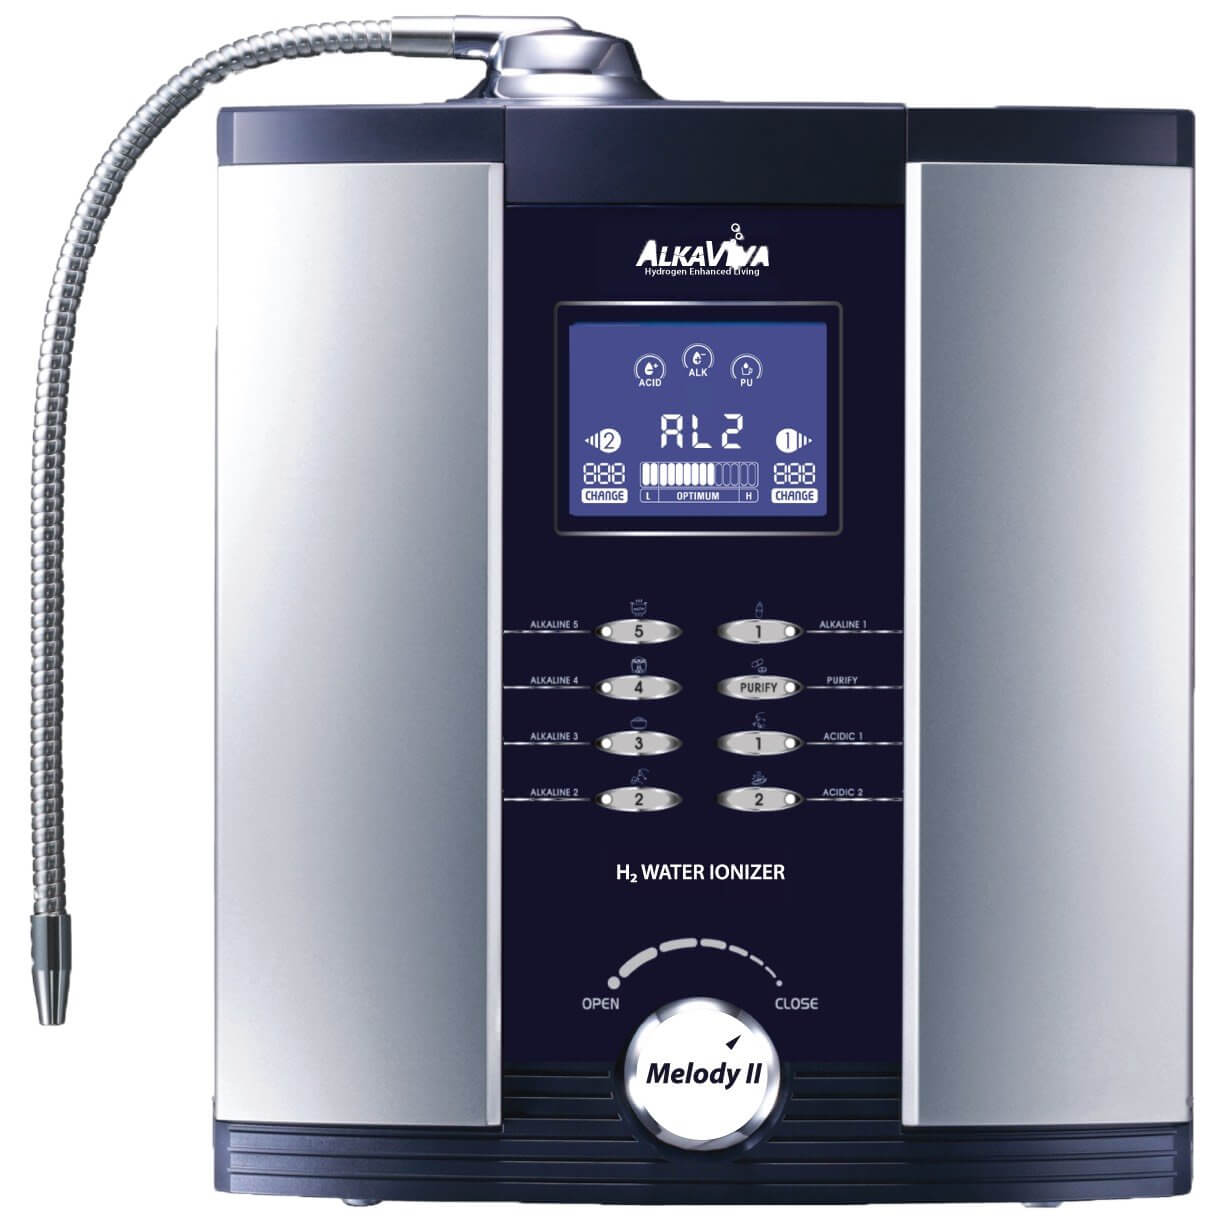 AlkaViva Water Ionizer Machines (Vesta H2, Delphi H2, Athena H2, Melody II) - Quality Water Treatment